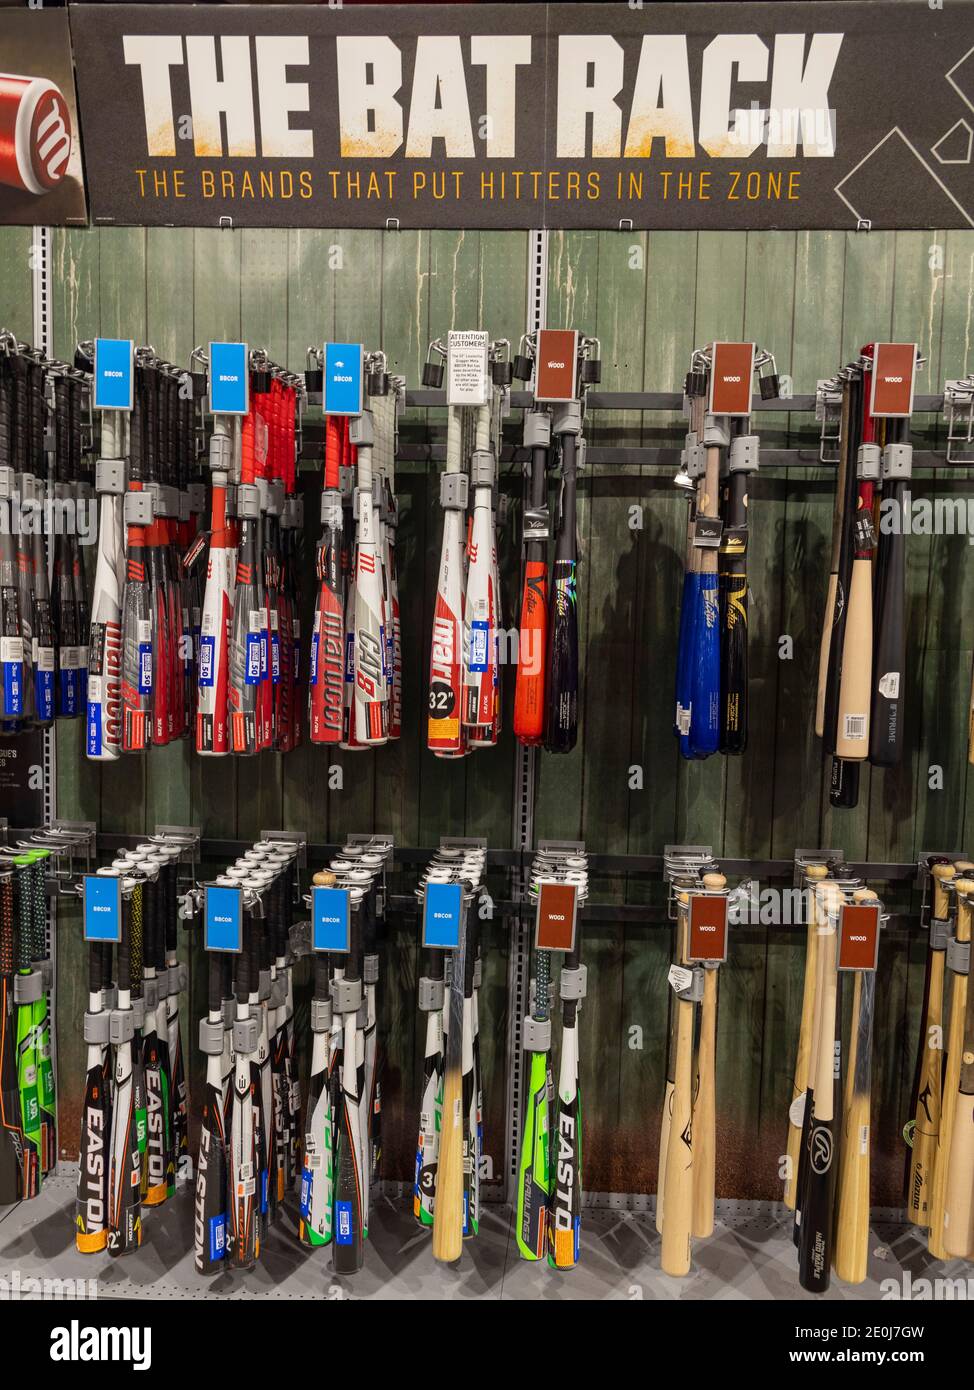 baseball bats, Dick's Sporting Goods, Columbia Mall, Kennewick, Washington Sate, USA Stock Photo